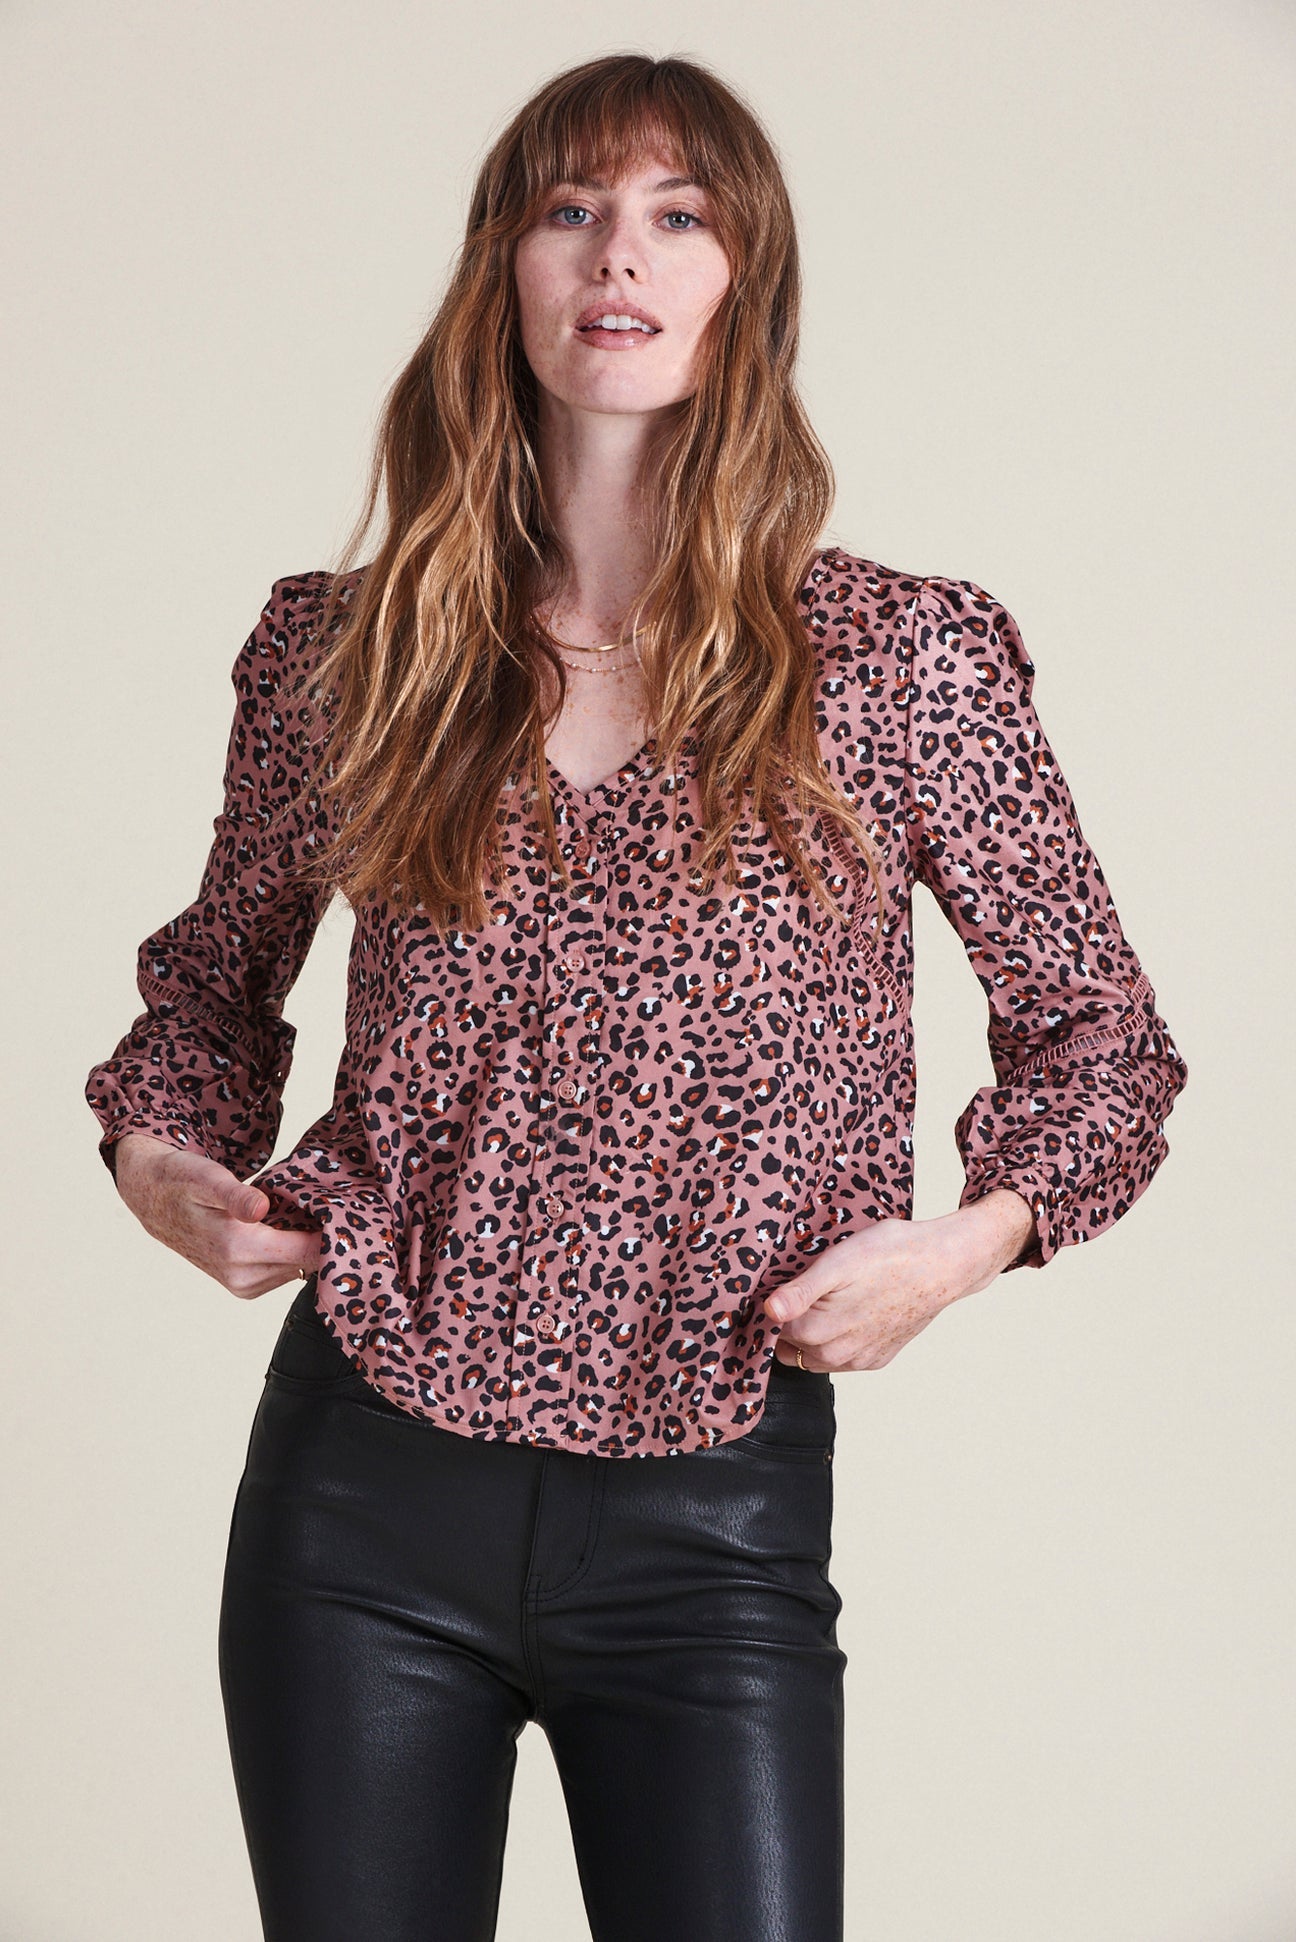 The Annie Shirt in Leopard